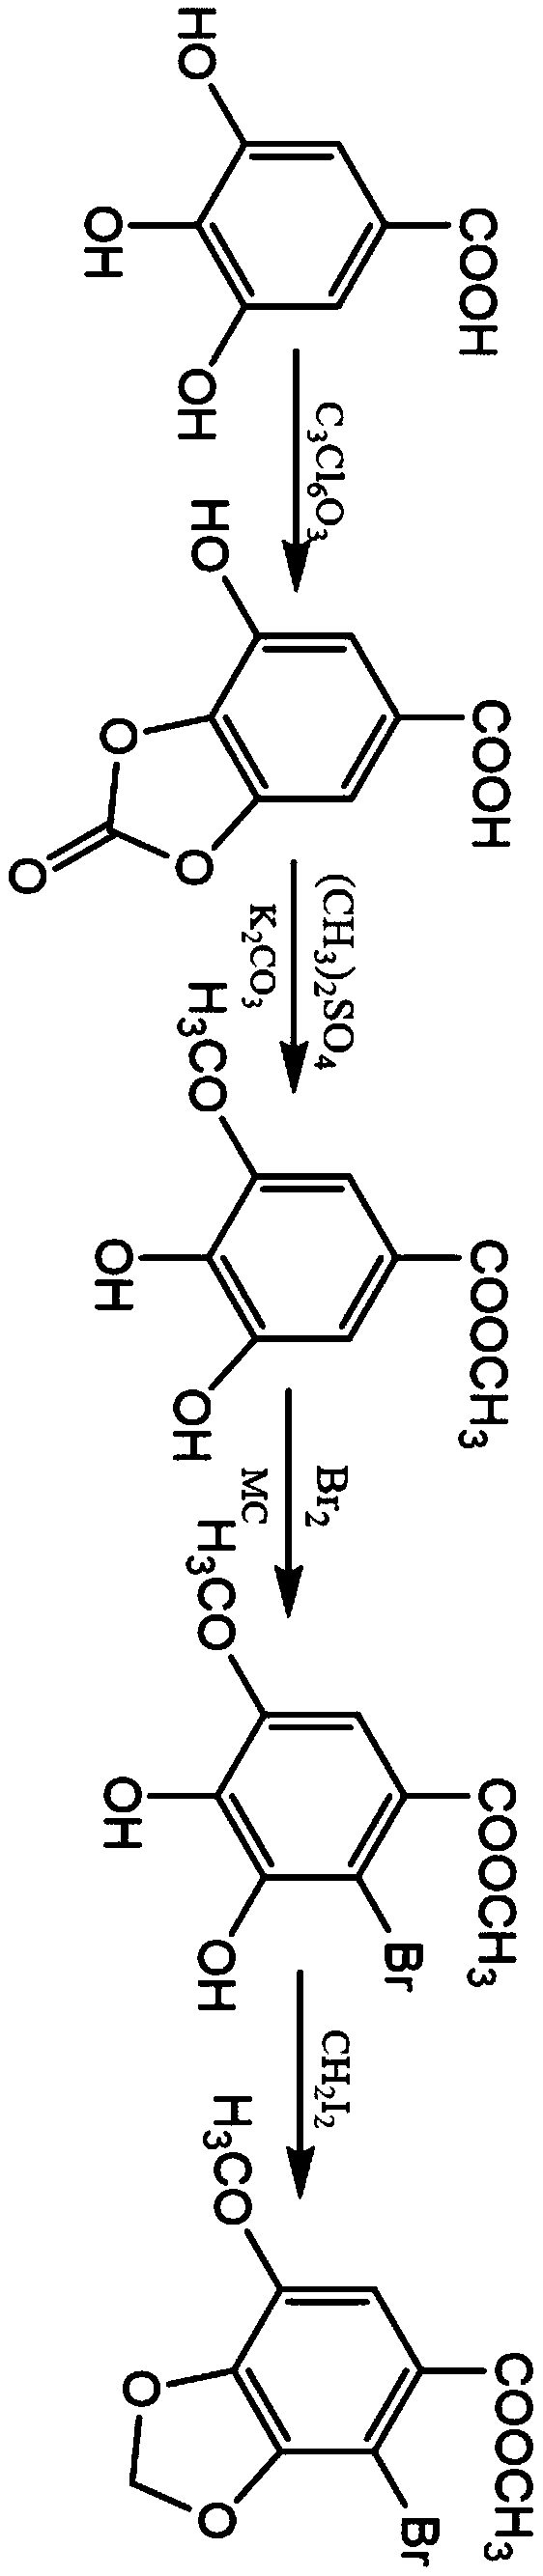 Synthetic method of bifendate intermediate